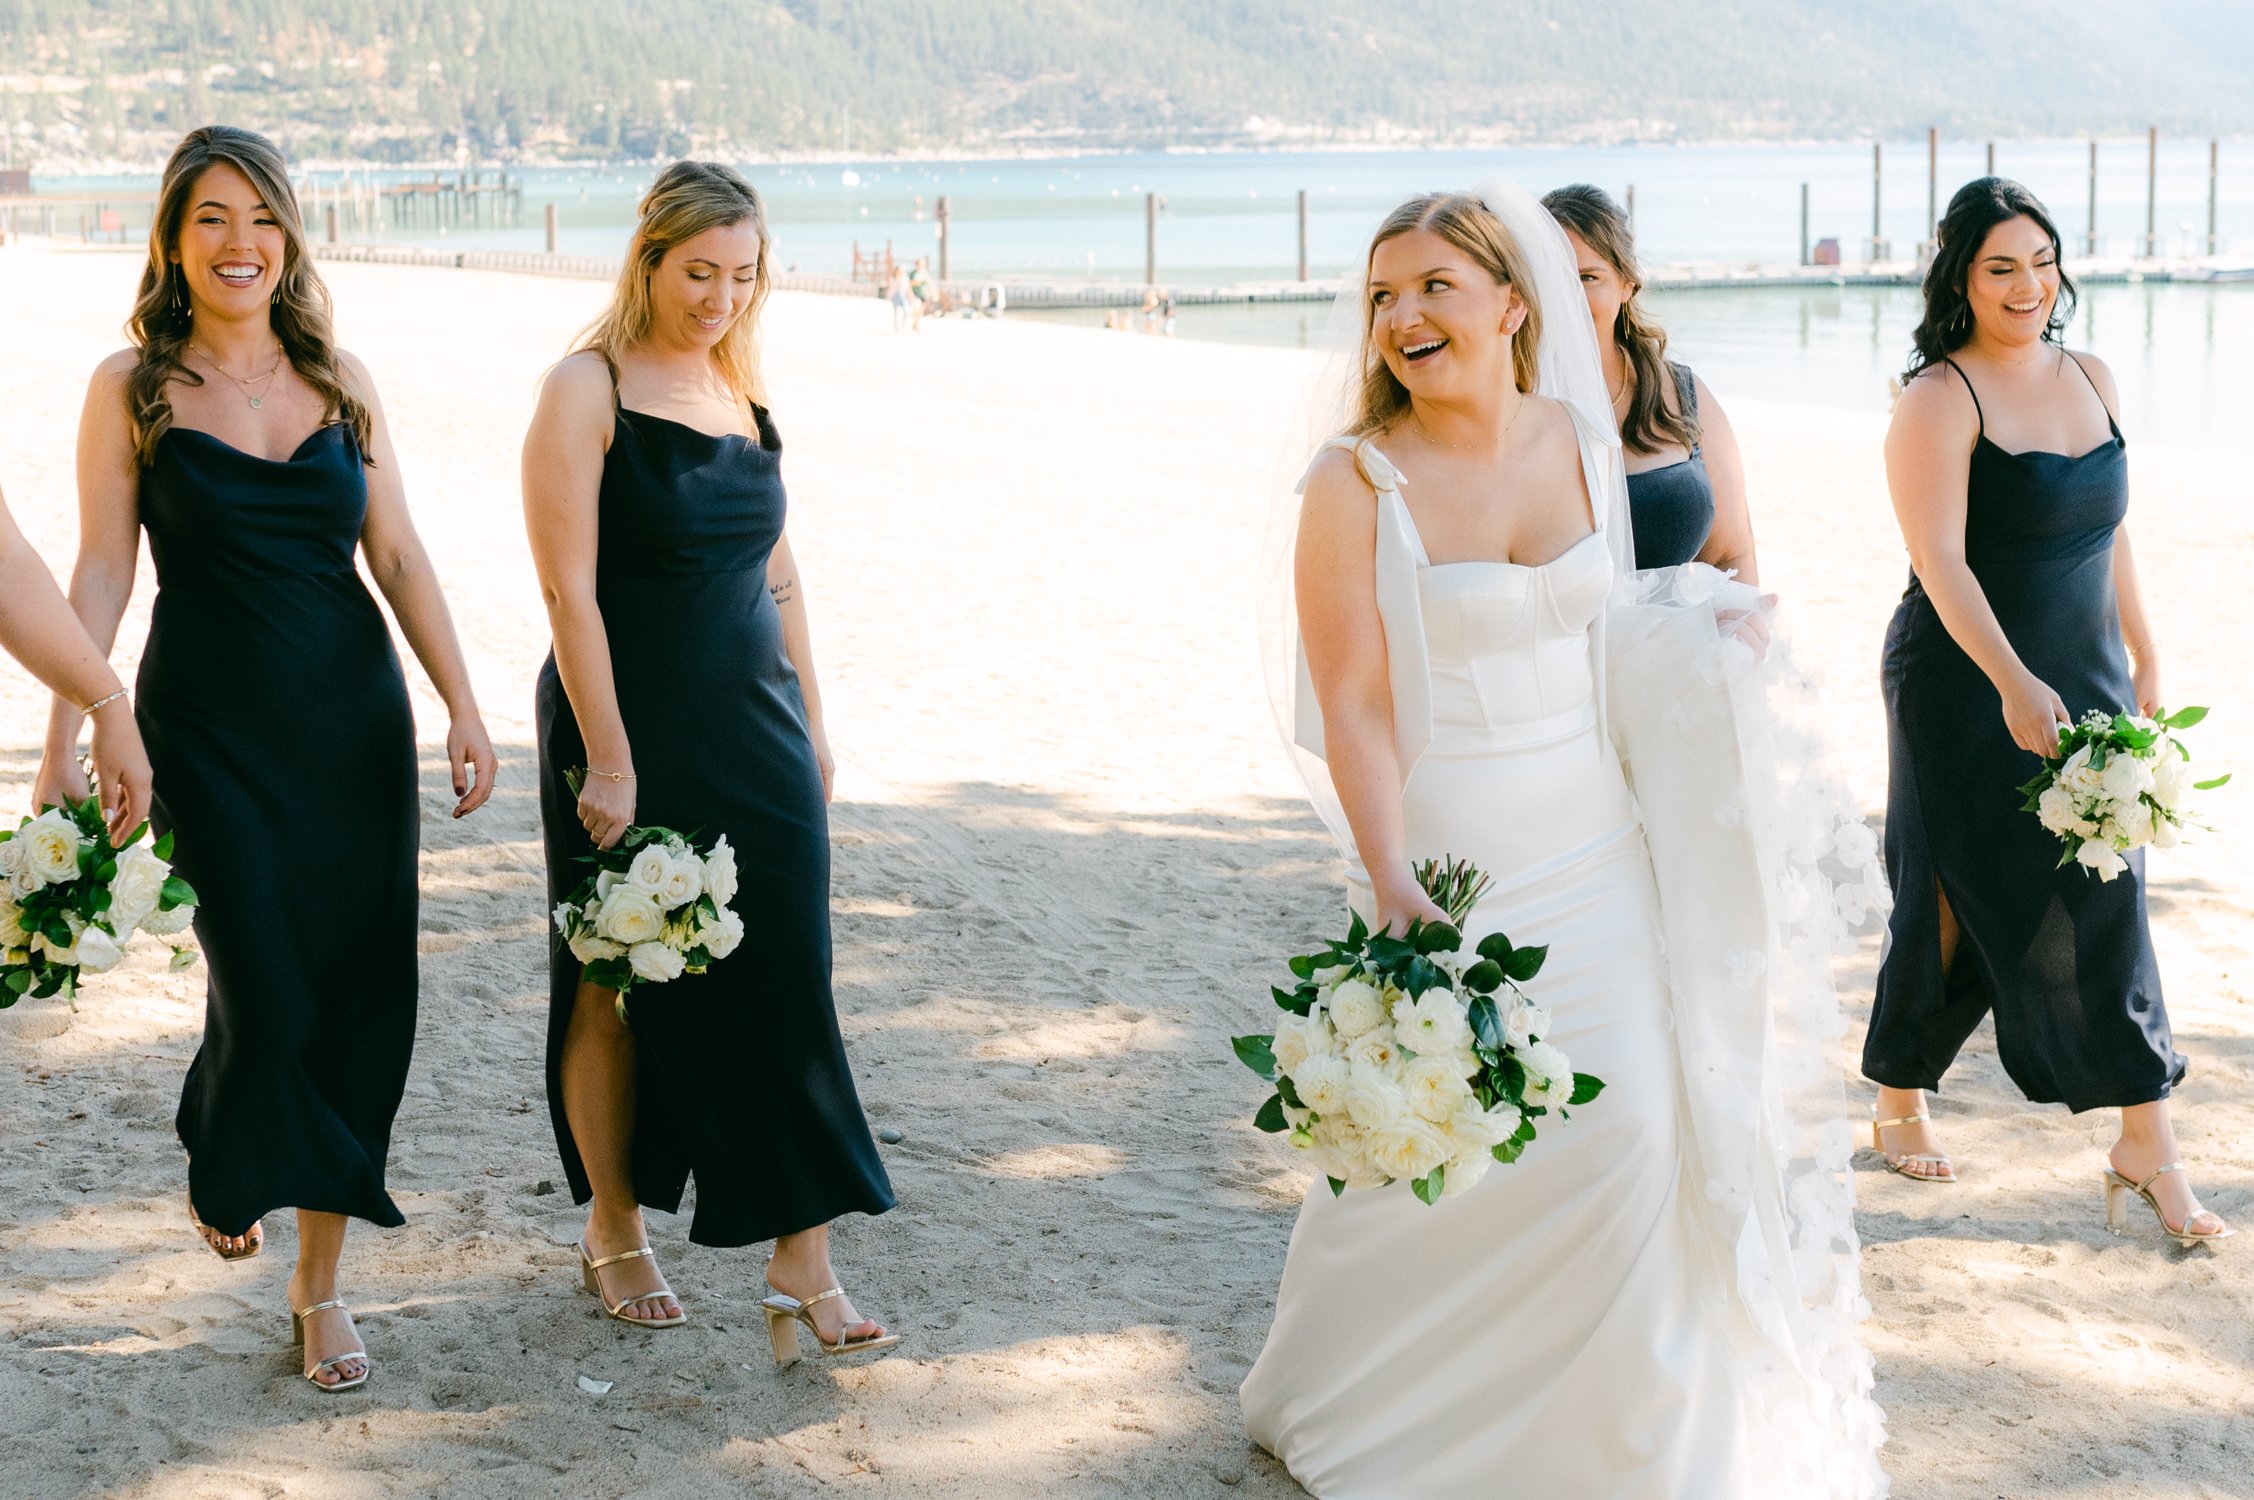 Hyatt Lake Tahoe wedding, photo of bride with her bridesmaids